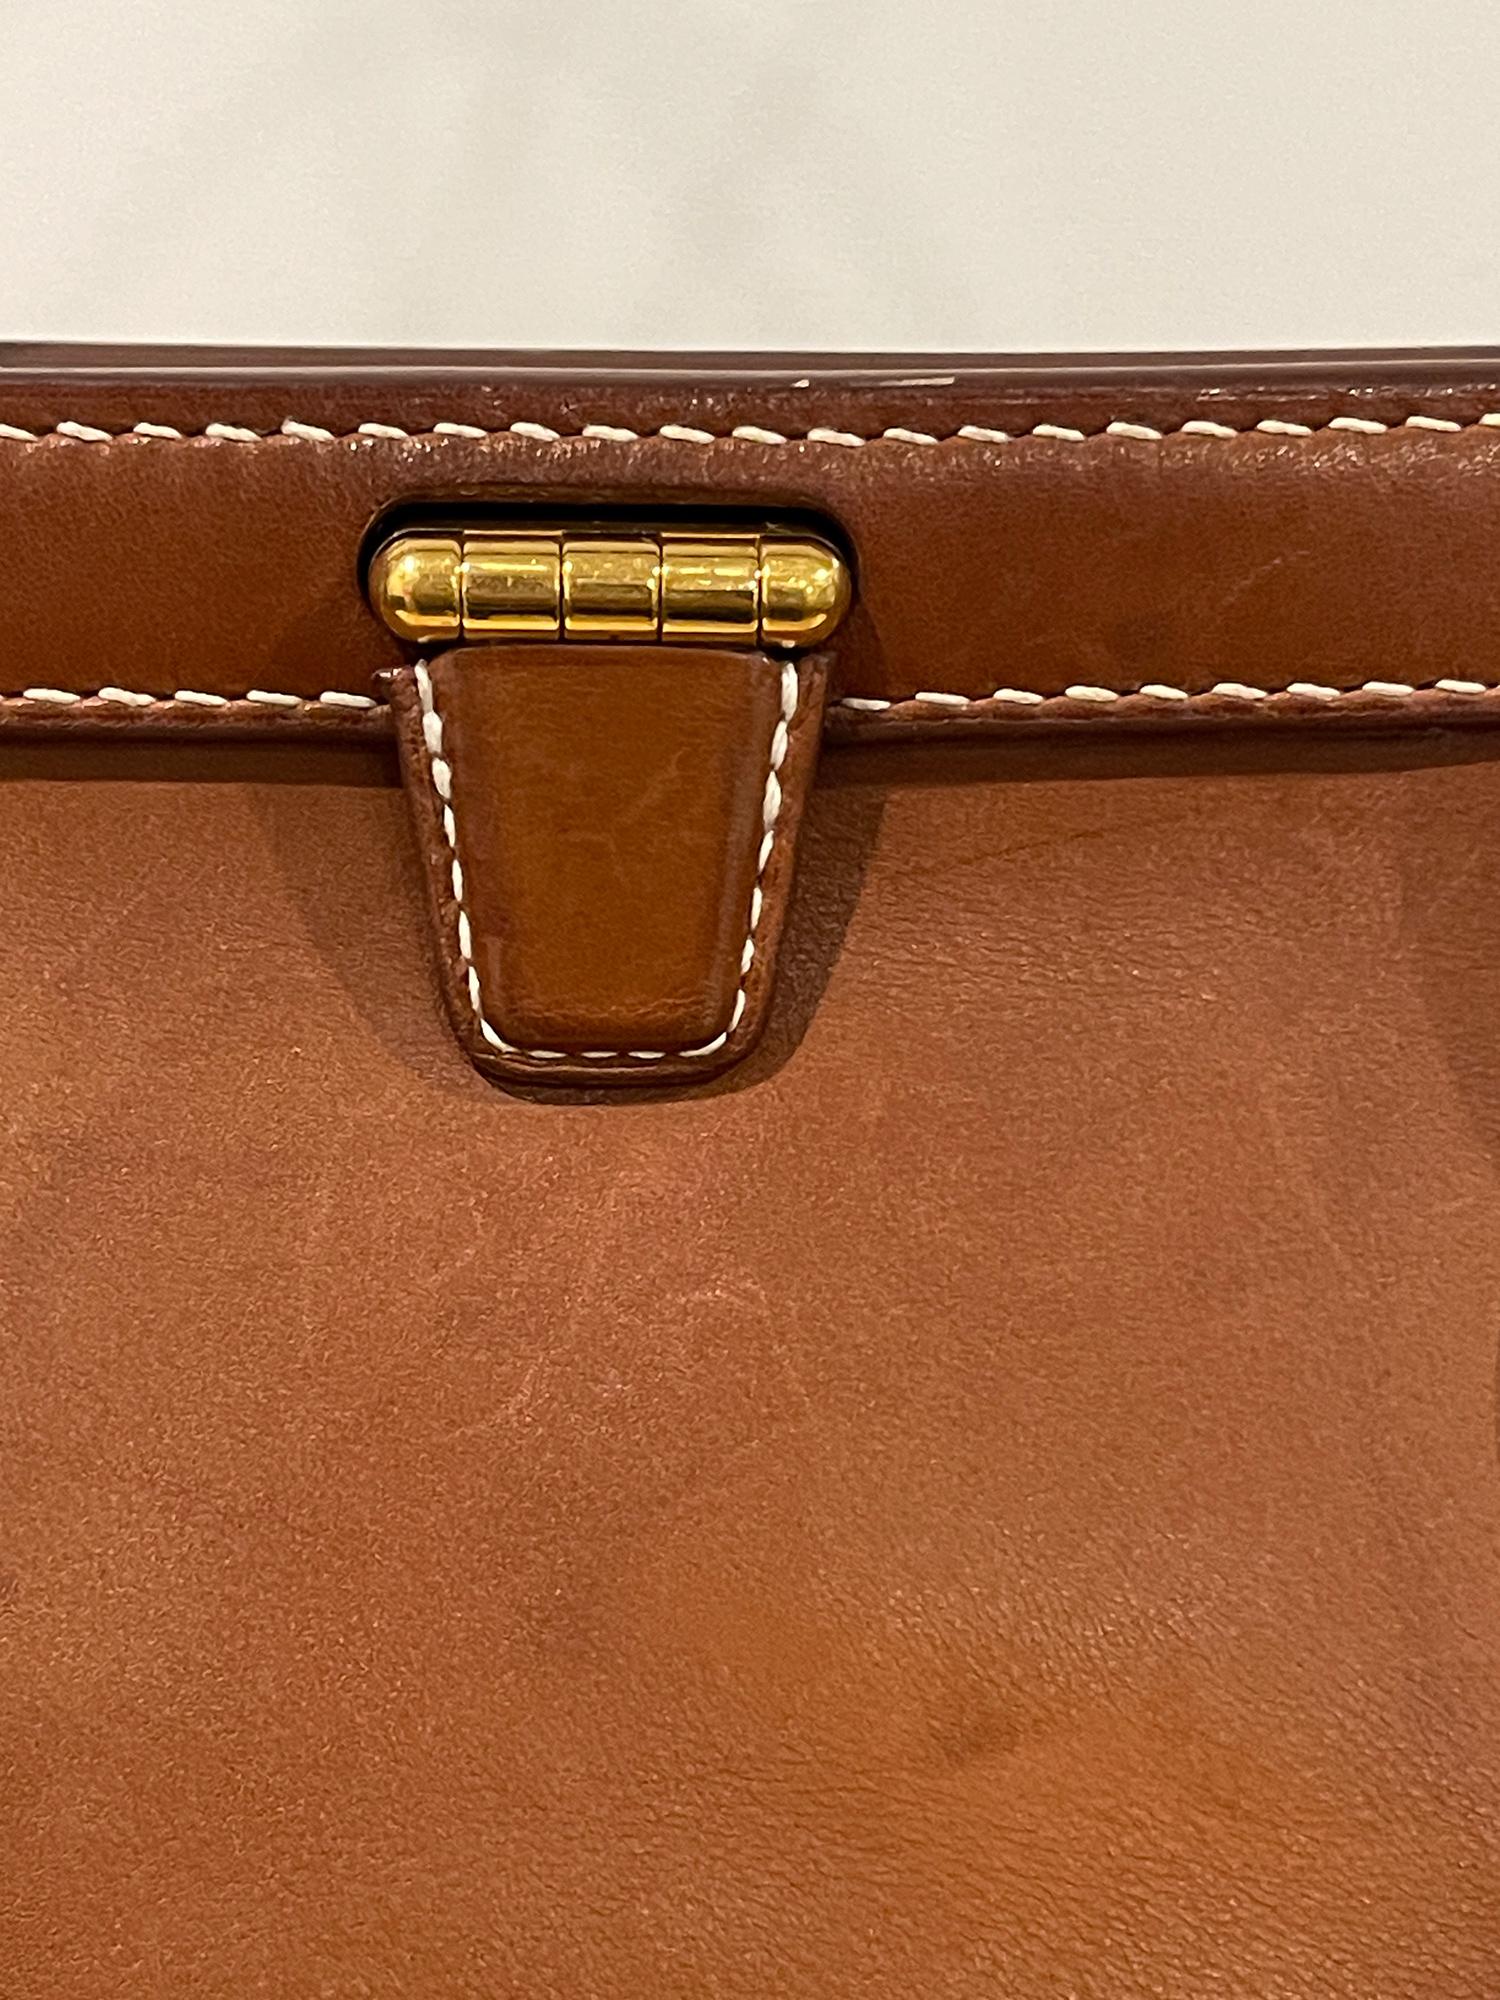 Leather HERMES Paris - Rare Tan Barenia Calfskin Convoyeur Bag. Limited Edition For Sale